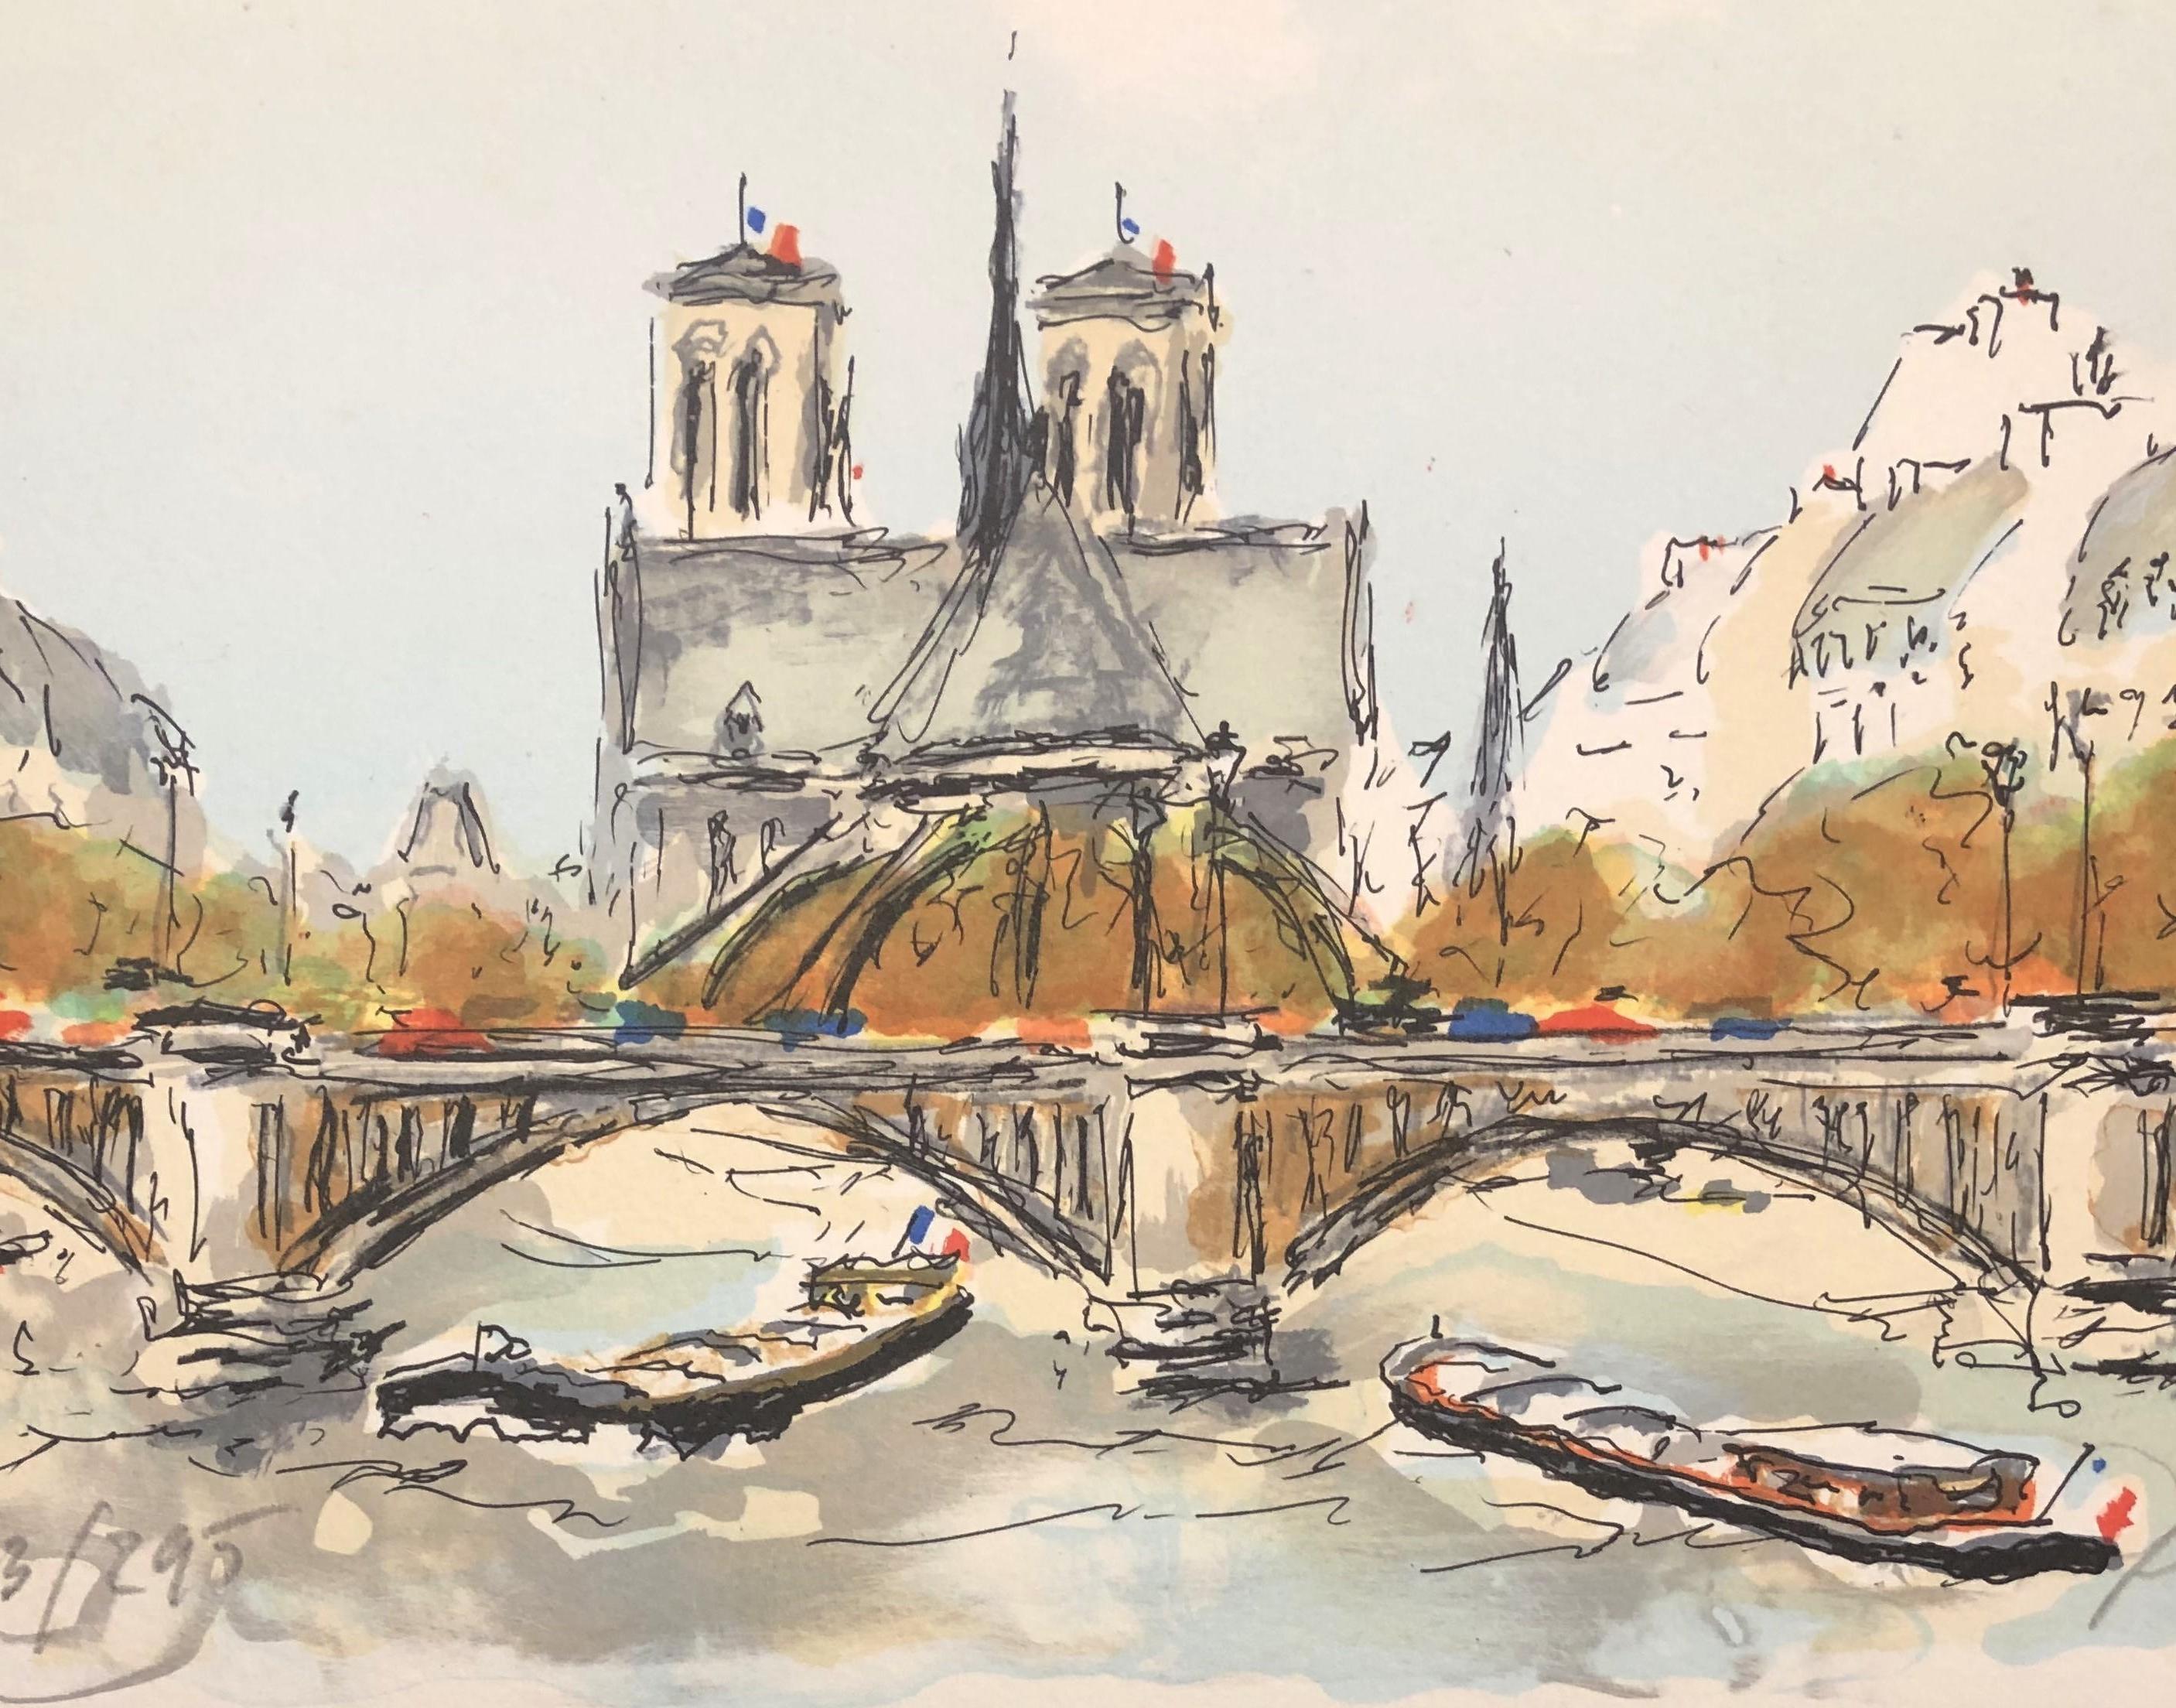 Paris - Notre Dame de Paris - Original Lithograph Handsigned N° - Print by Urbain Huchet